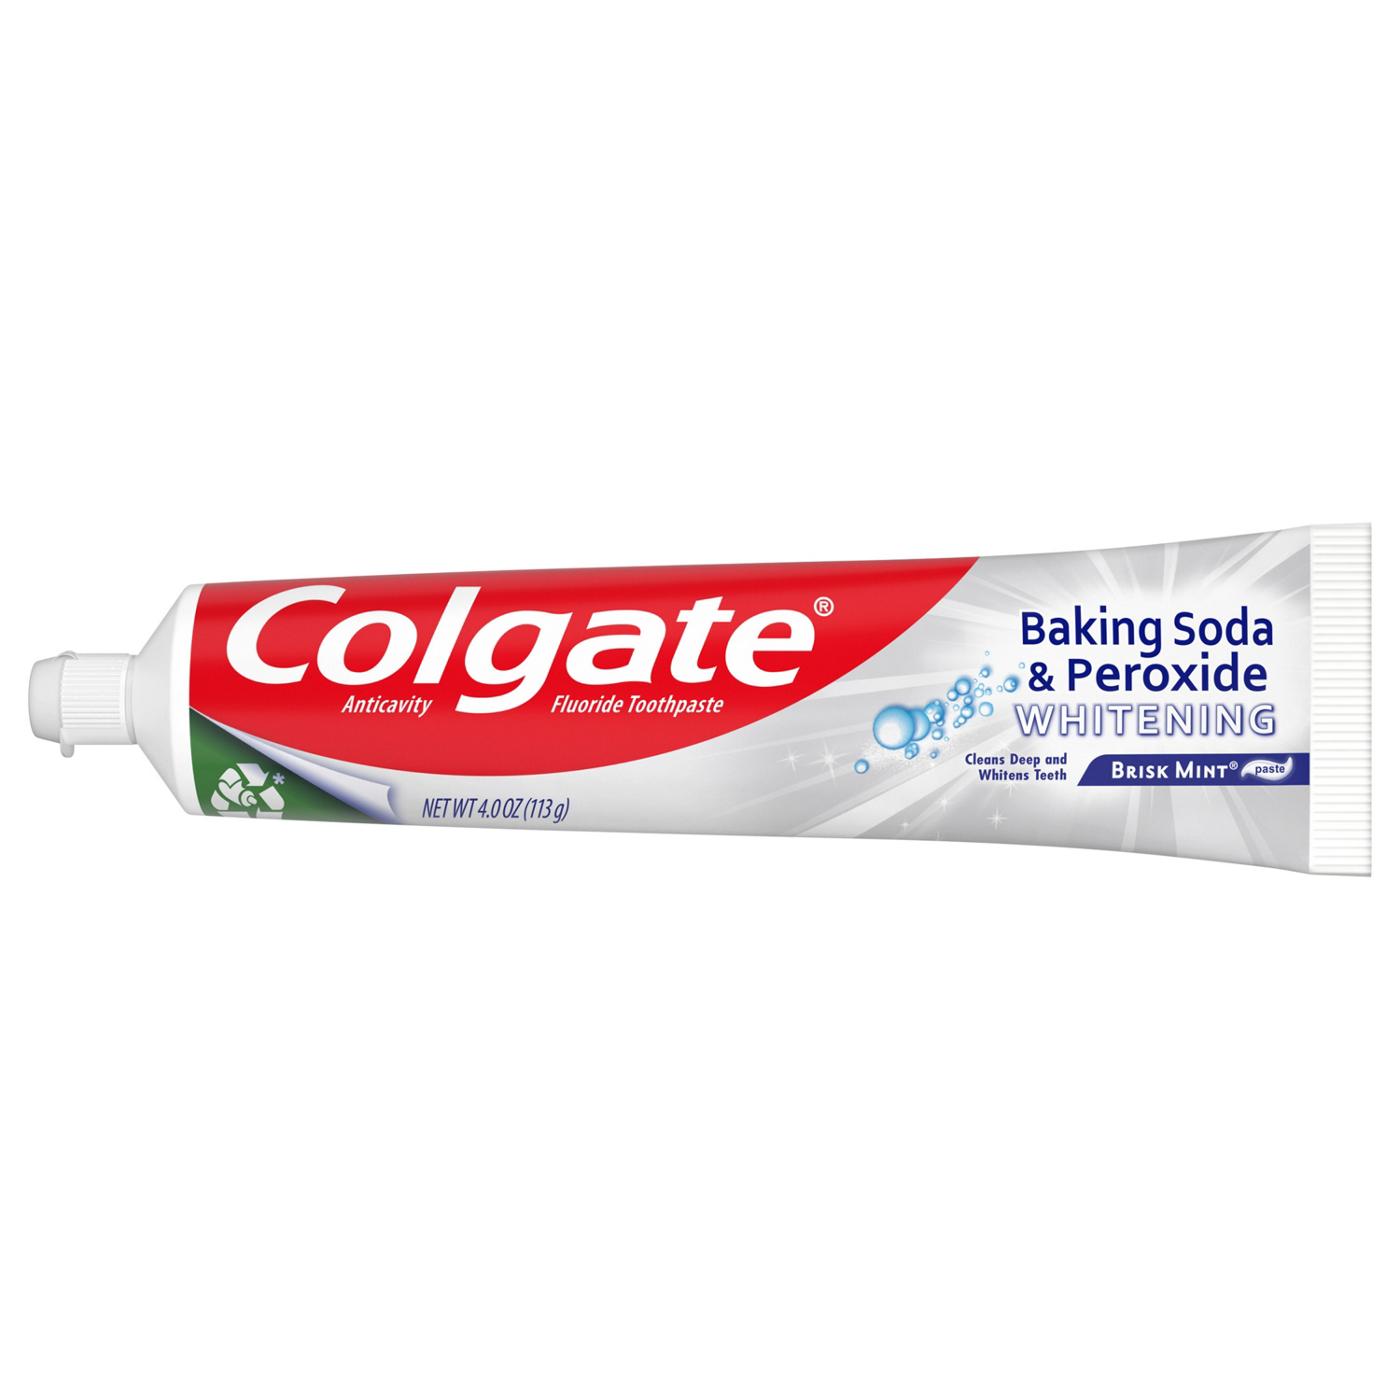 Colgate Baking Soda & Peroxide Whitening Anticavity Toothpaste - Brisk Mint; image 3 of 3